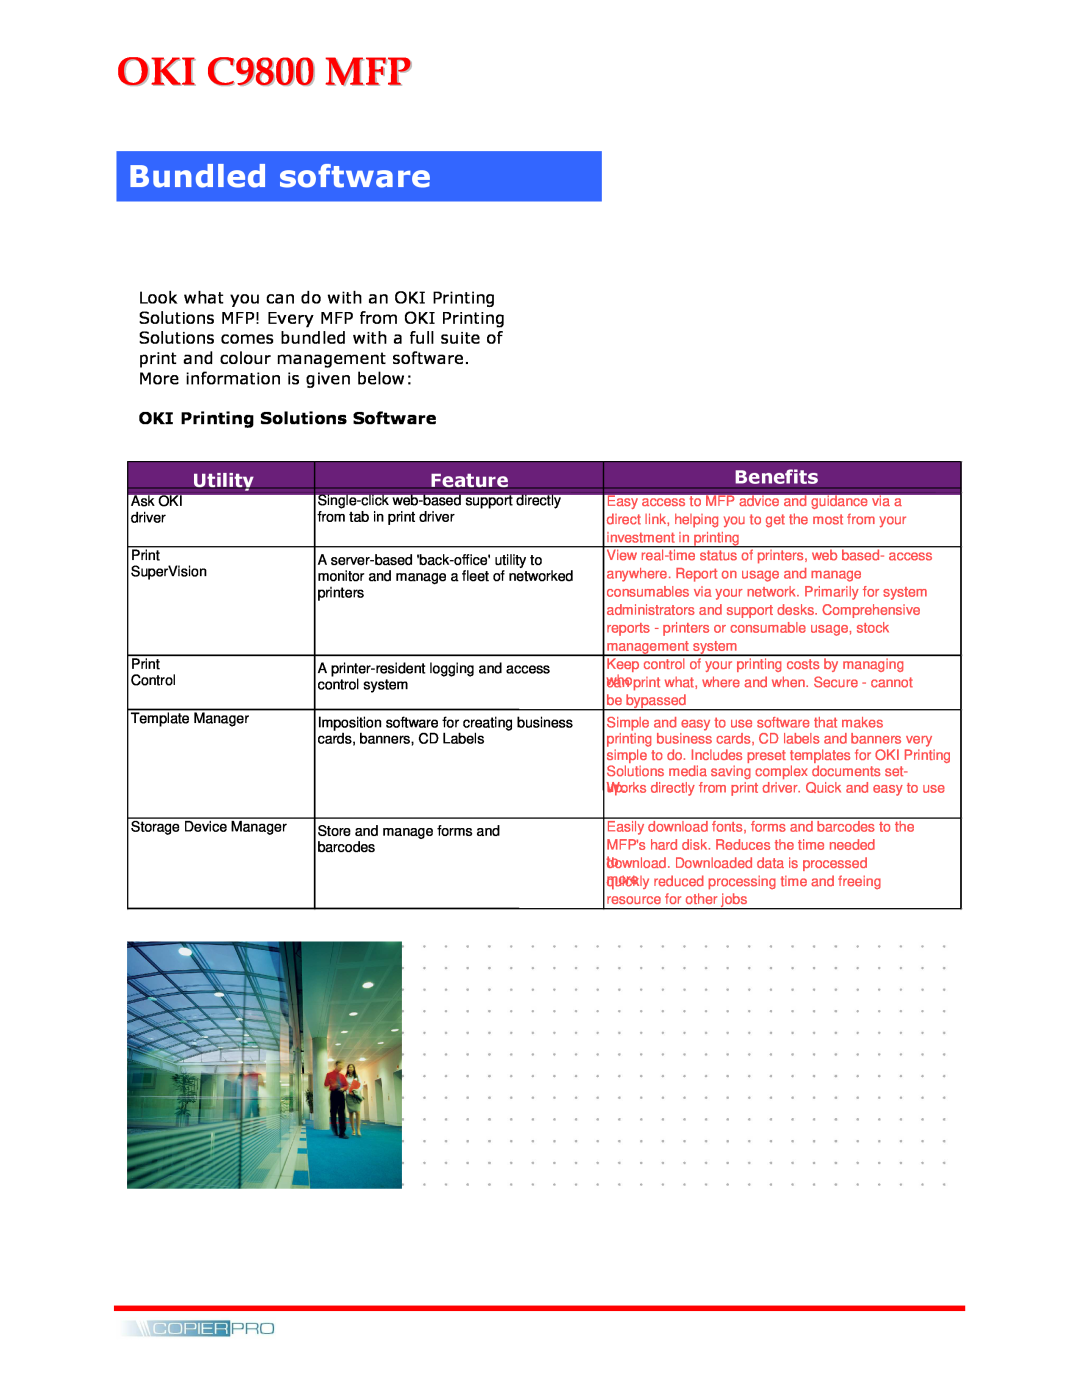 Oki brochure Bundled software, OKI C9800 MFP, Utility, Feature, Benefits 